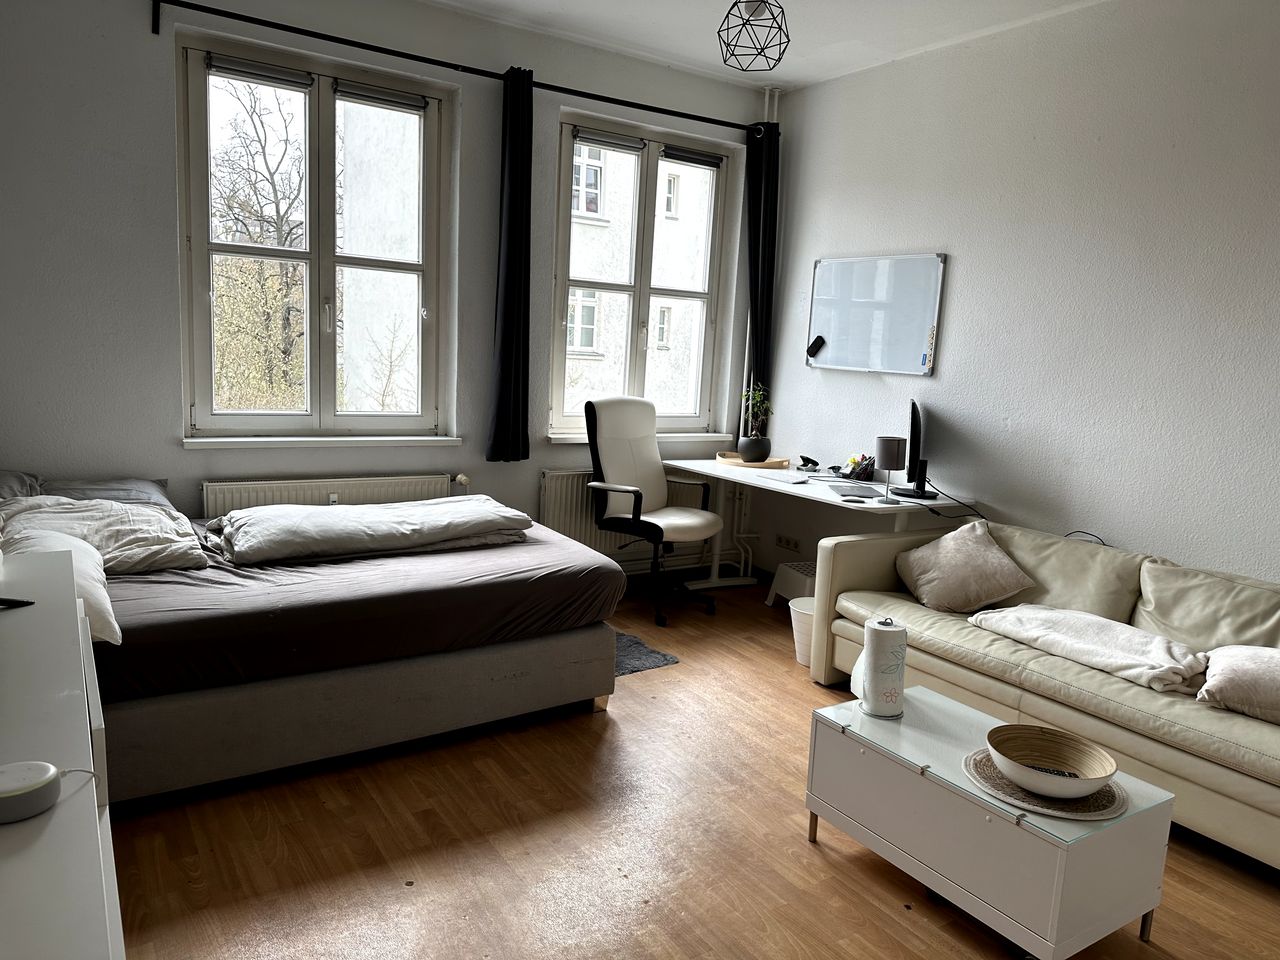 Prime Location: Charming Apartment near Ostkreuz and Boxhagener Platz